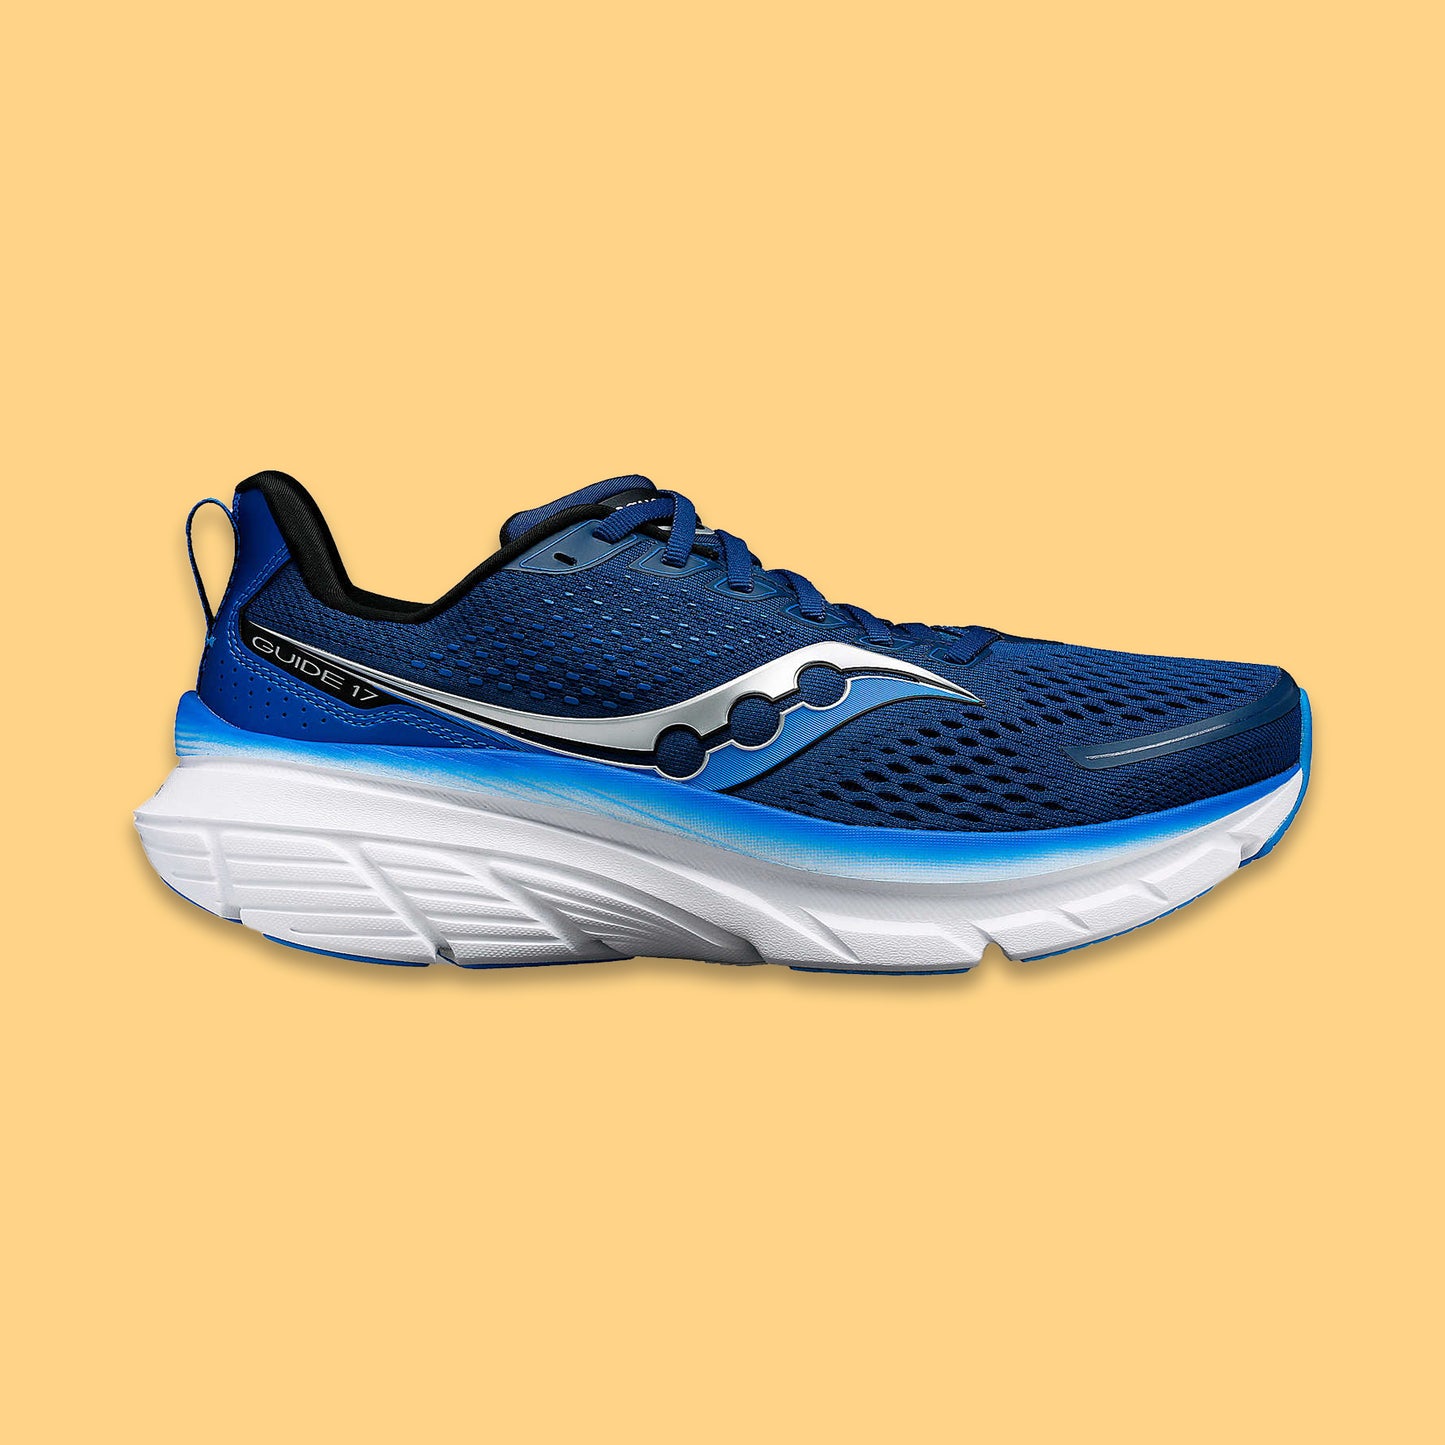 Men's Guide 17 - Stability Running Shoe